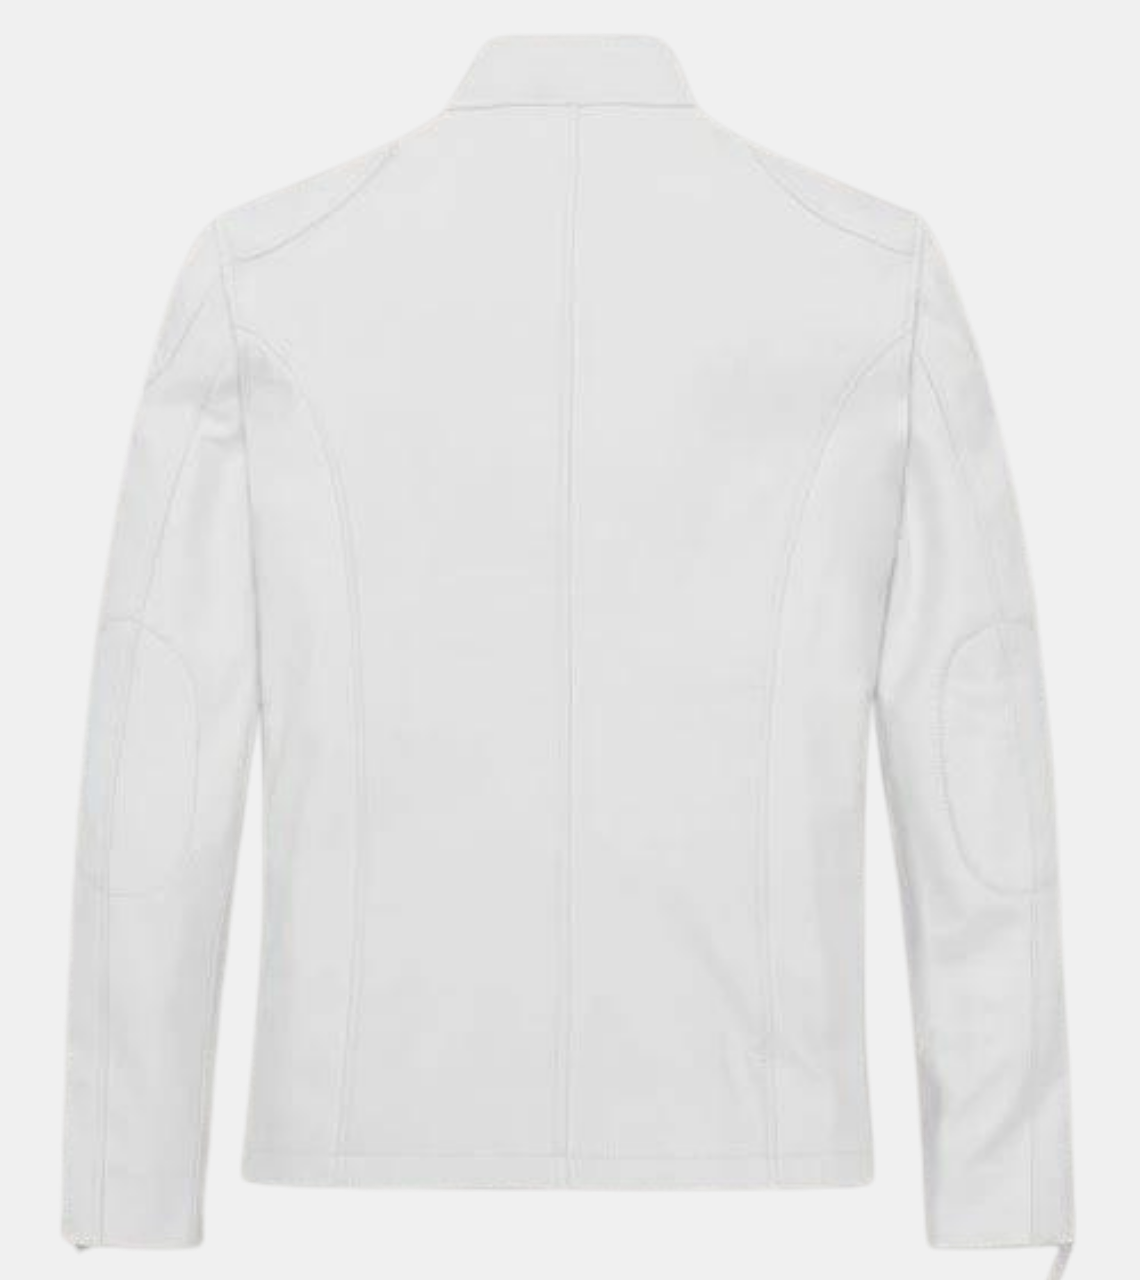  Men's White Leather Jacket